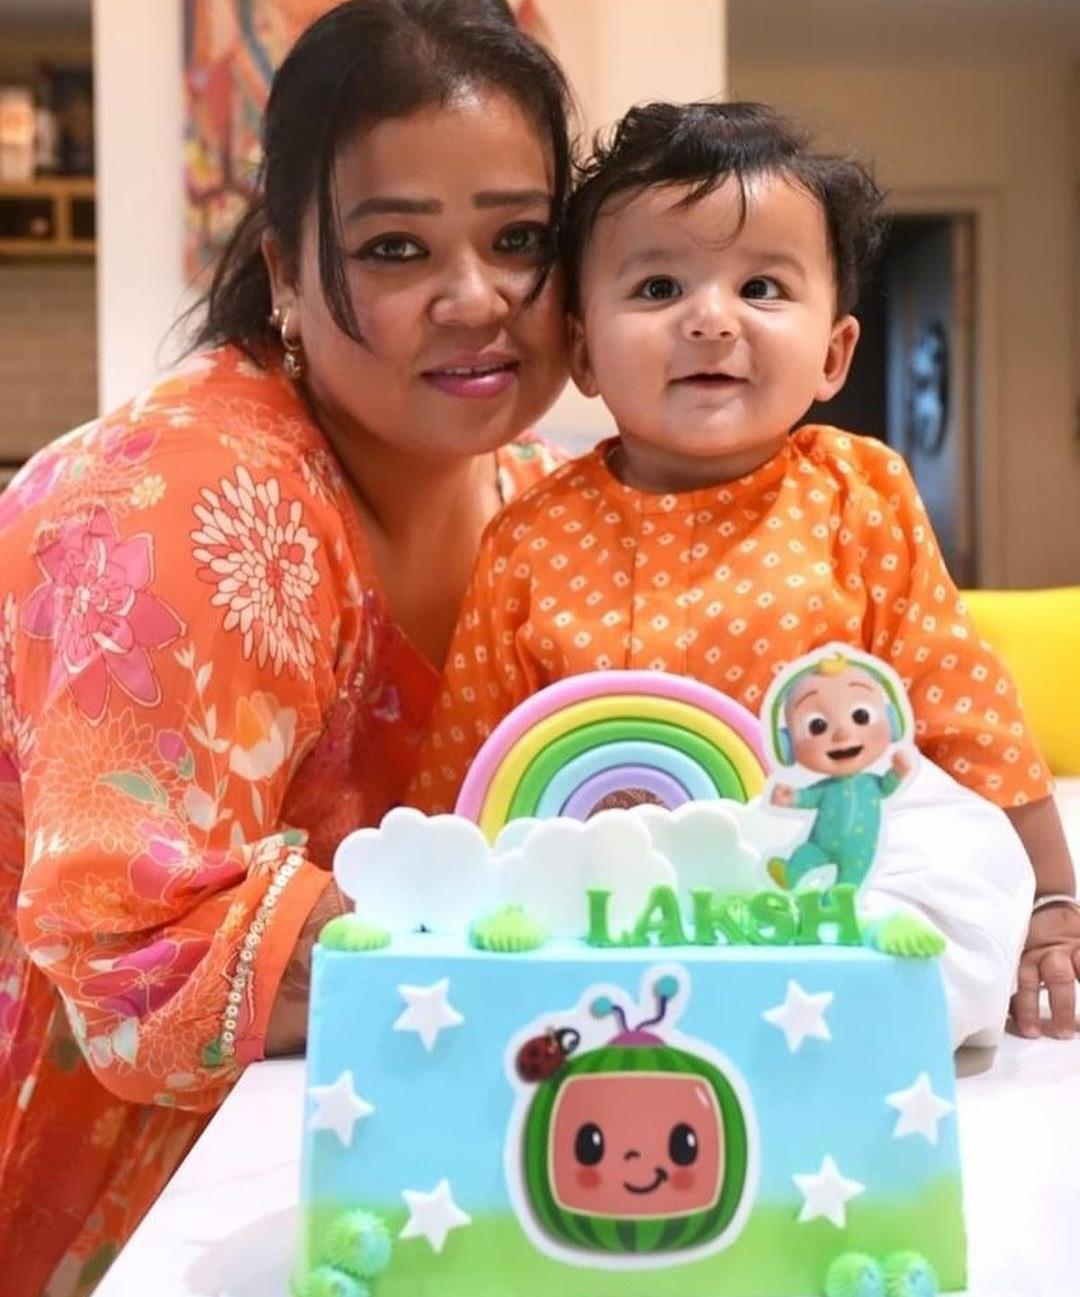 Bharti Singh celebrates son Laksh's six-month birthday